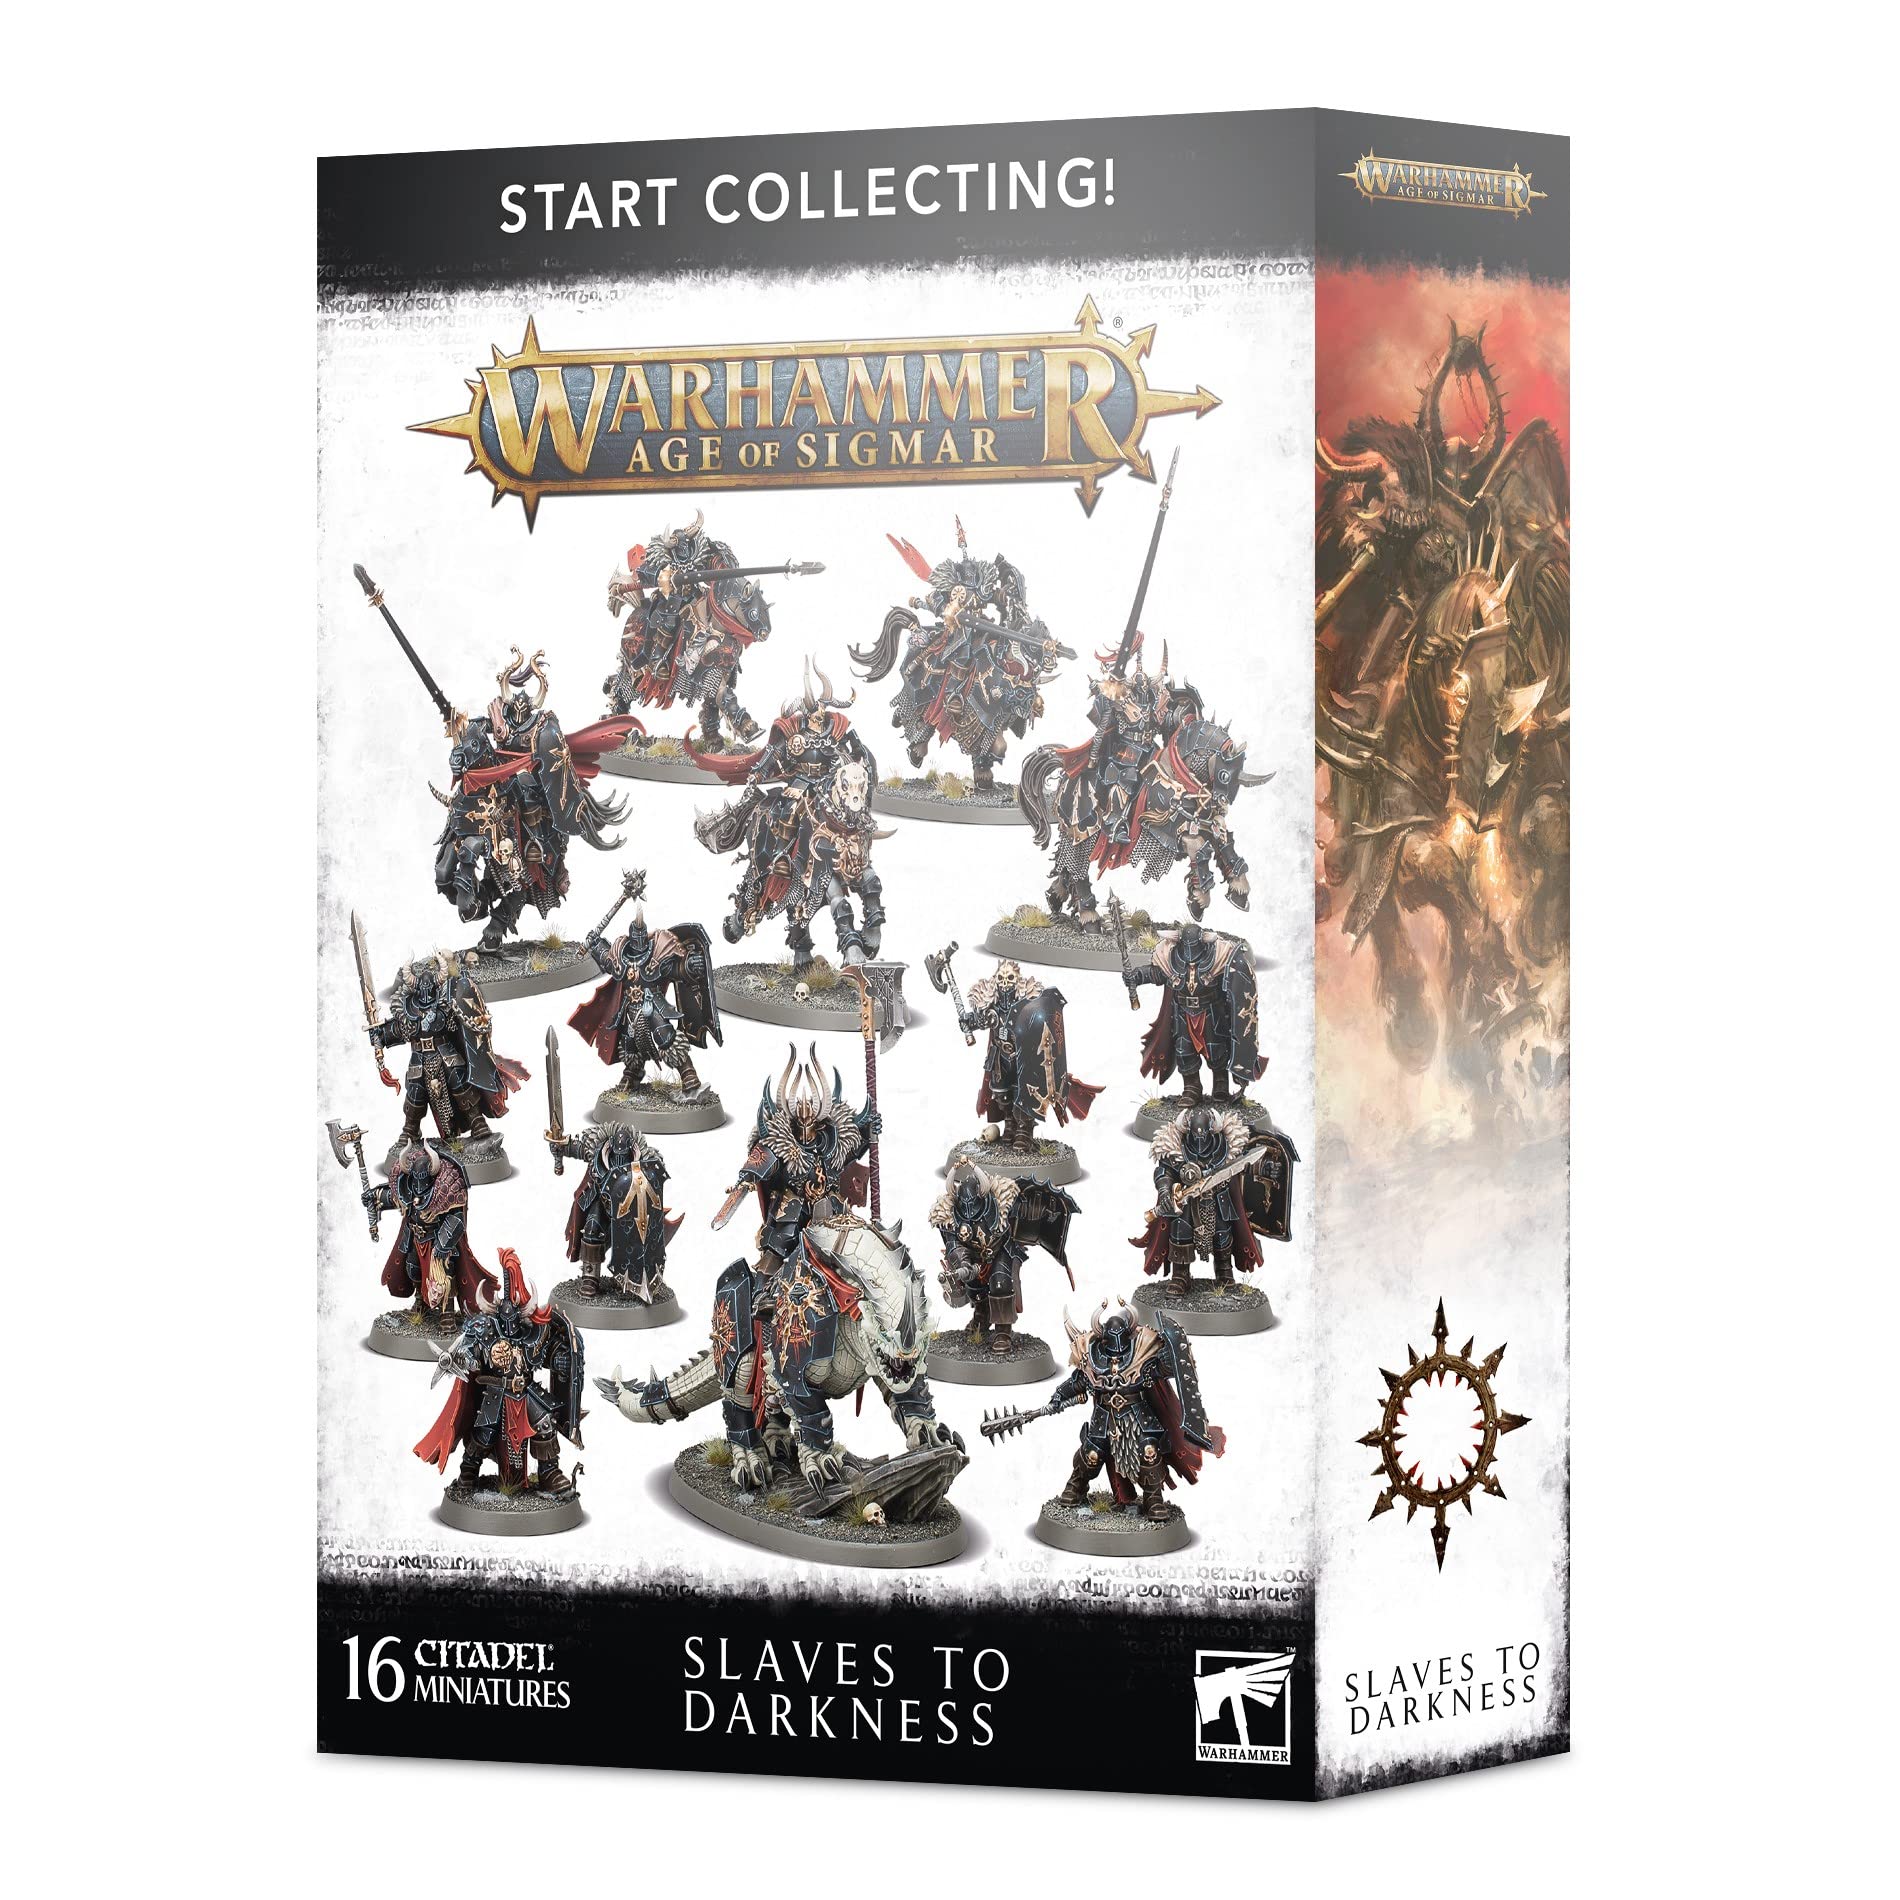 Games Workshop - Warhammer Age of Sigmar - Start Collecting! Slaves to Darkness: 2019